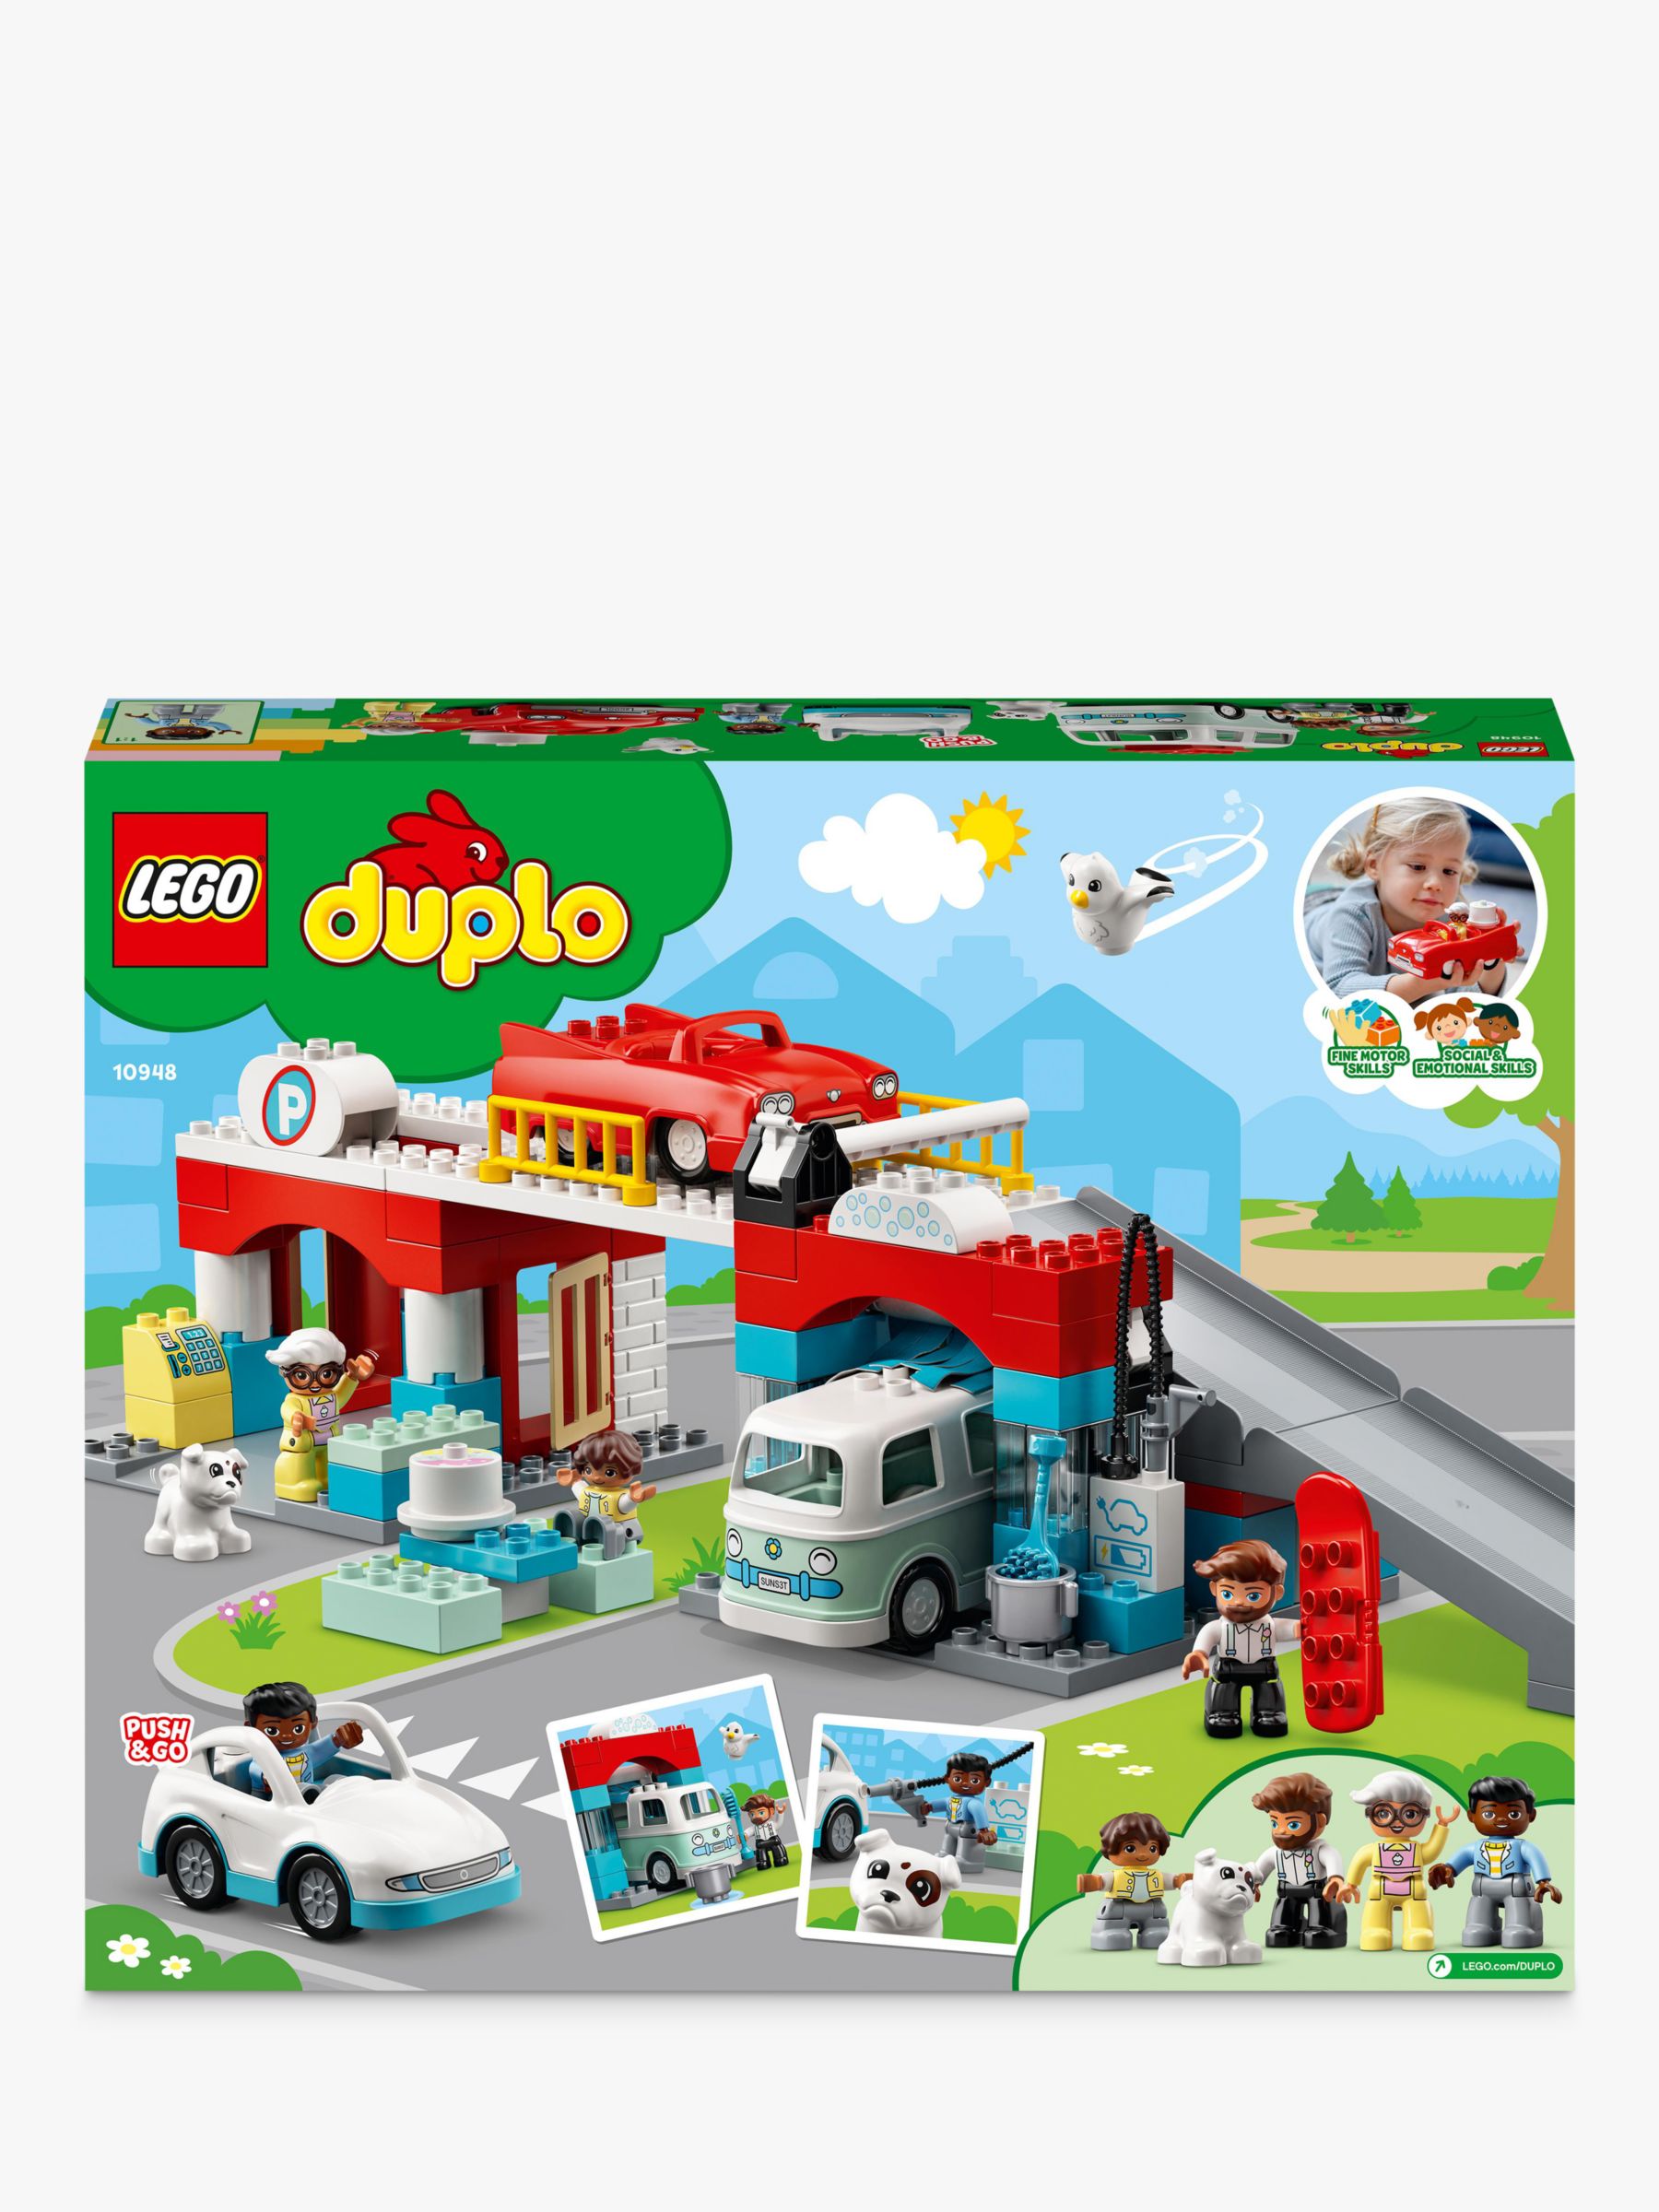 LEGO DUPLO 10948 Garage and Wash